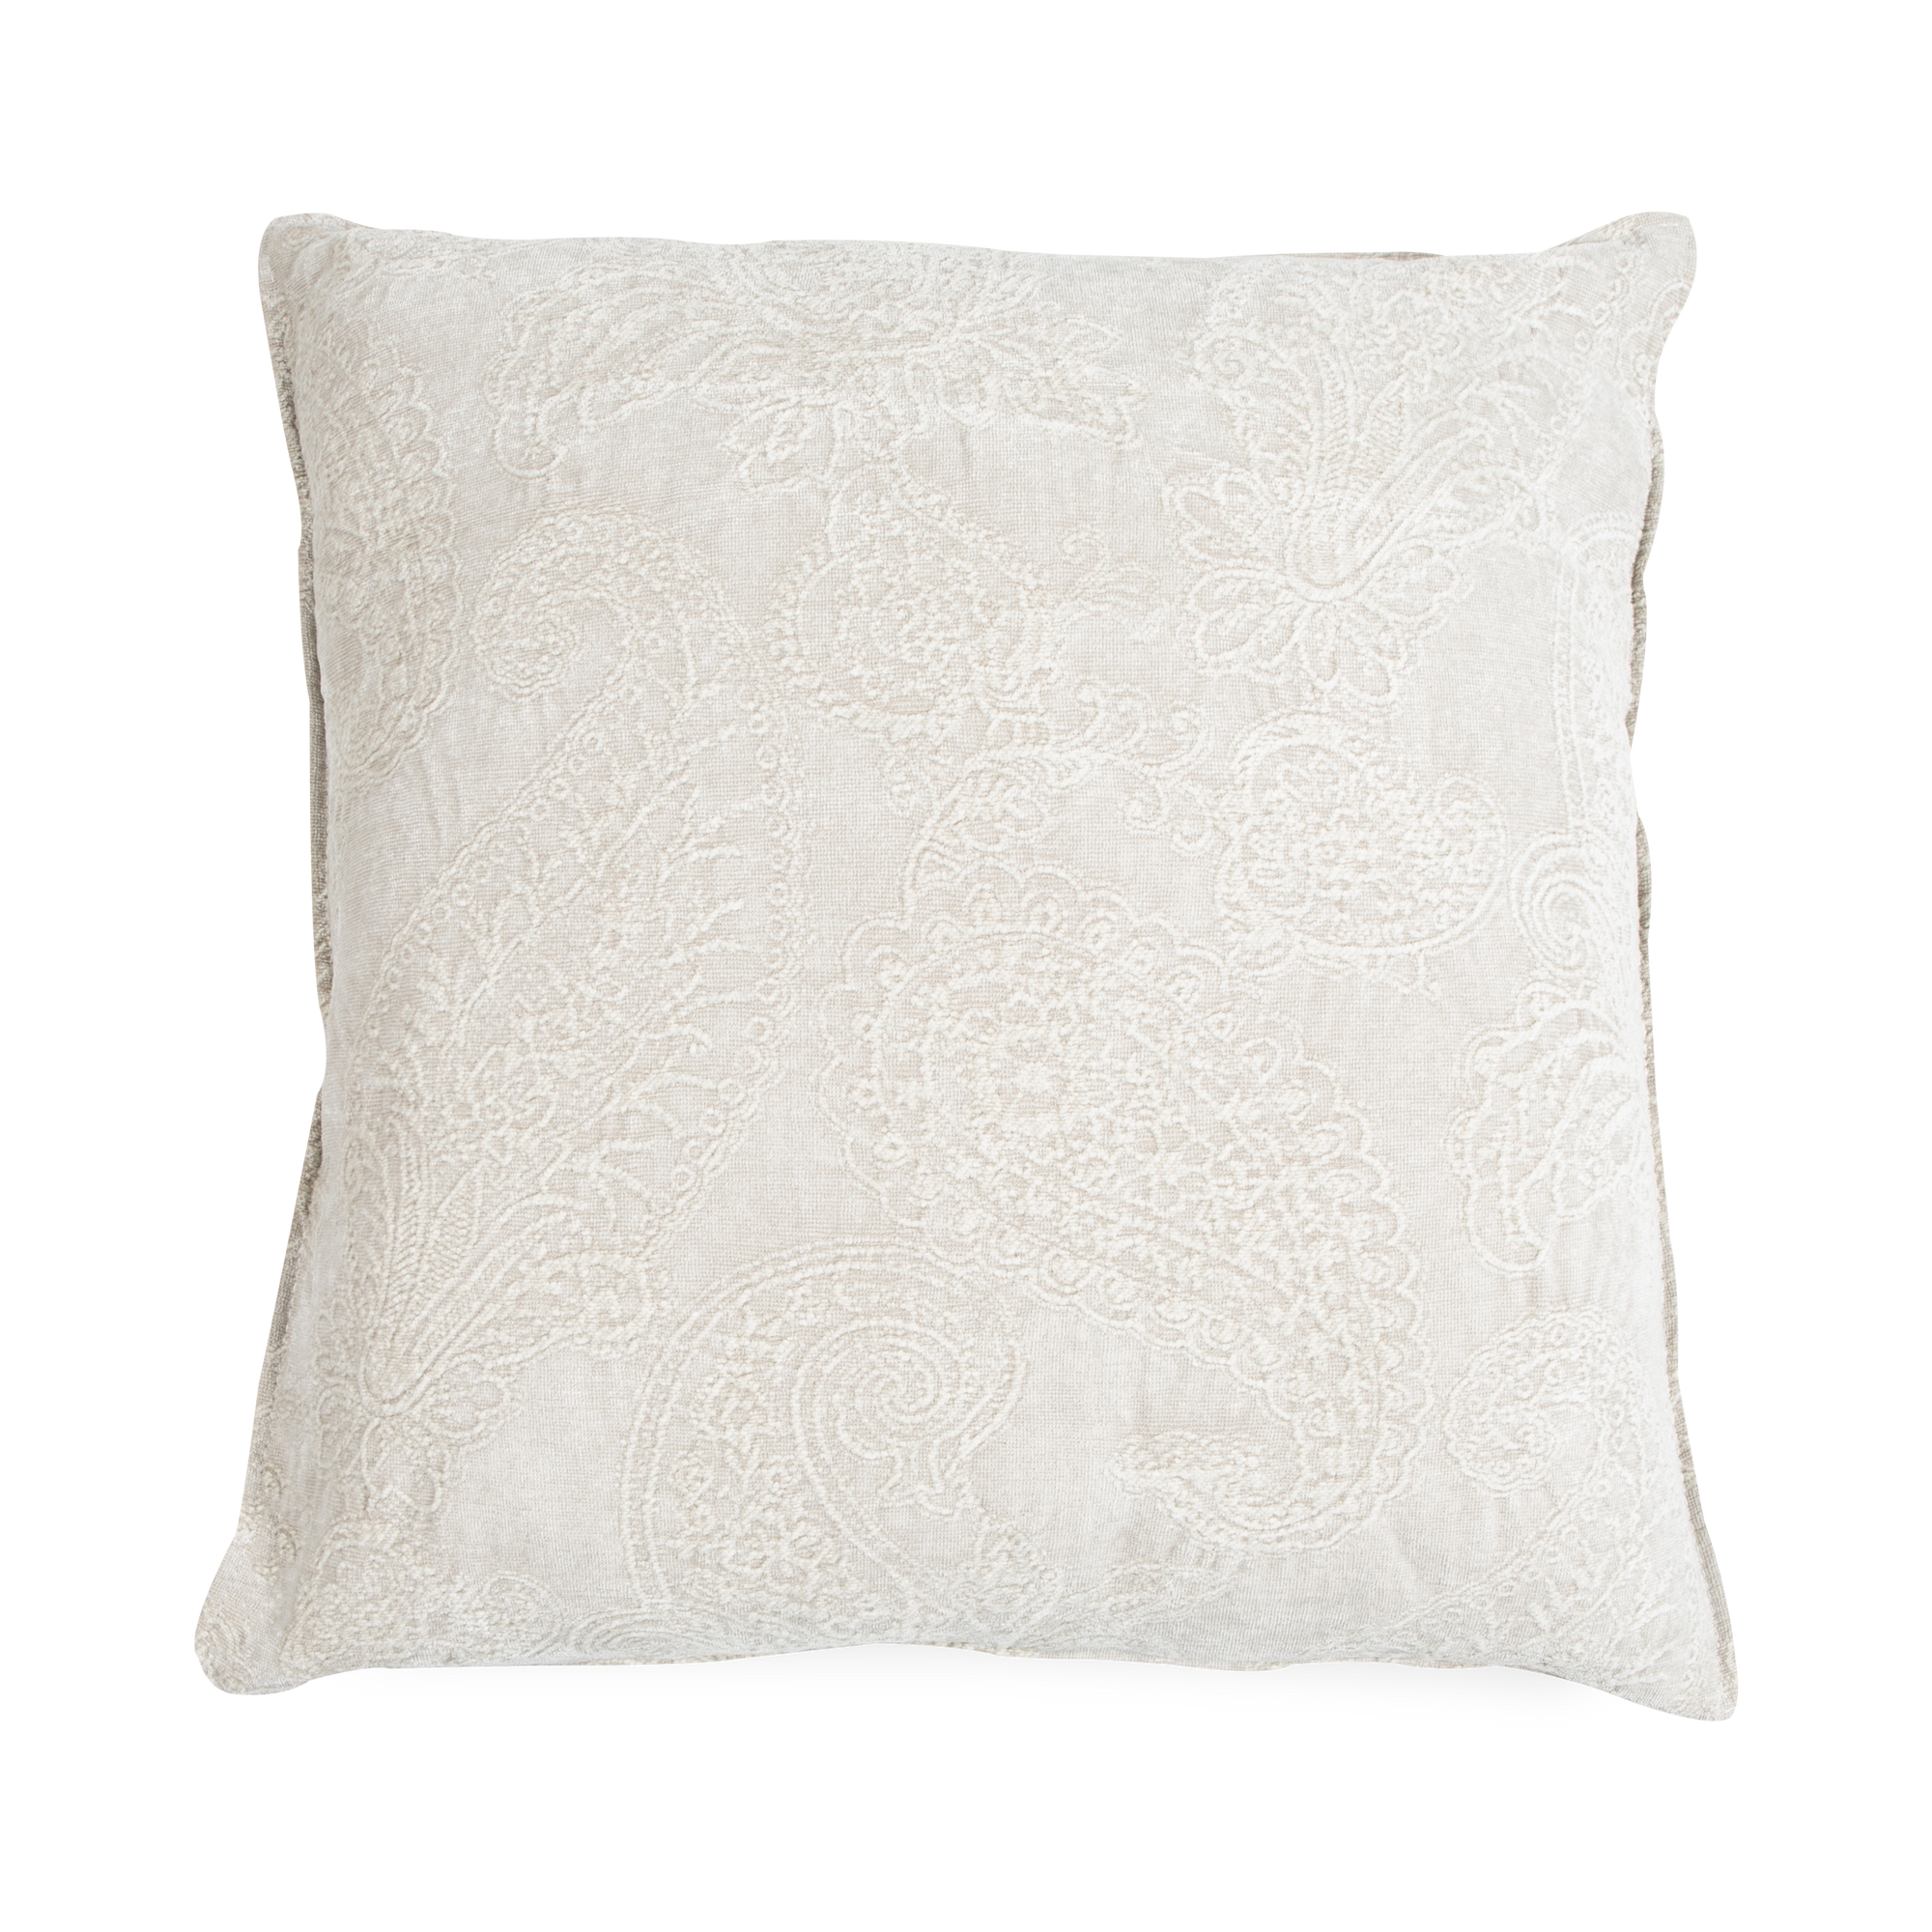 Woven Jacquard Pillow